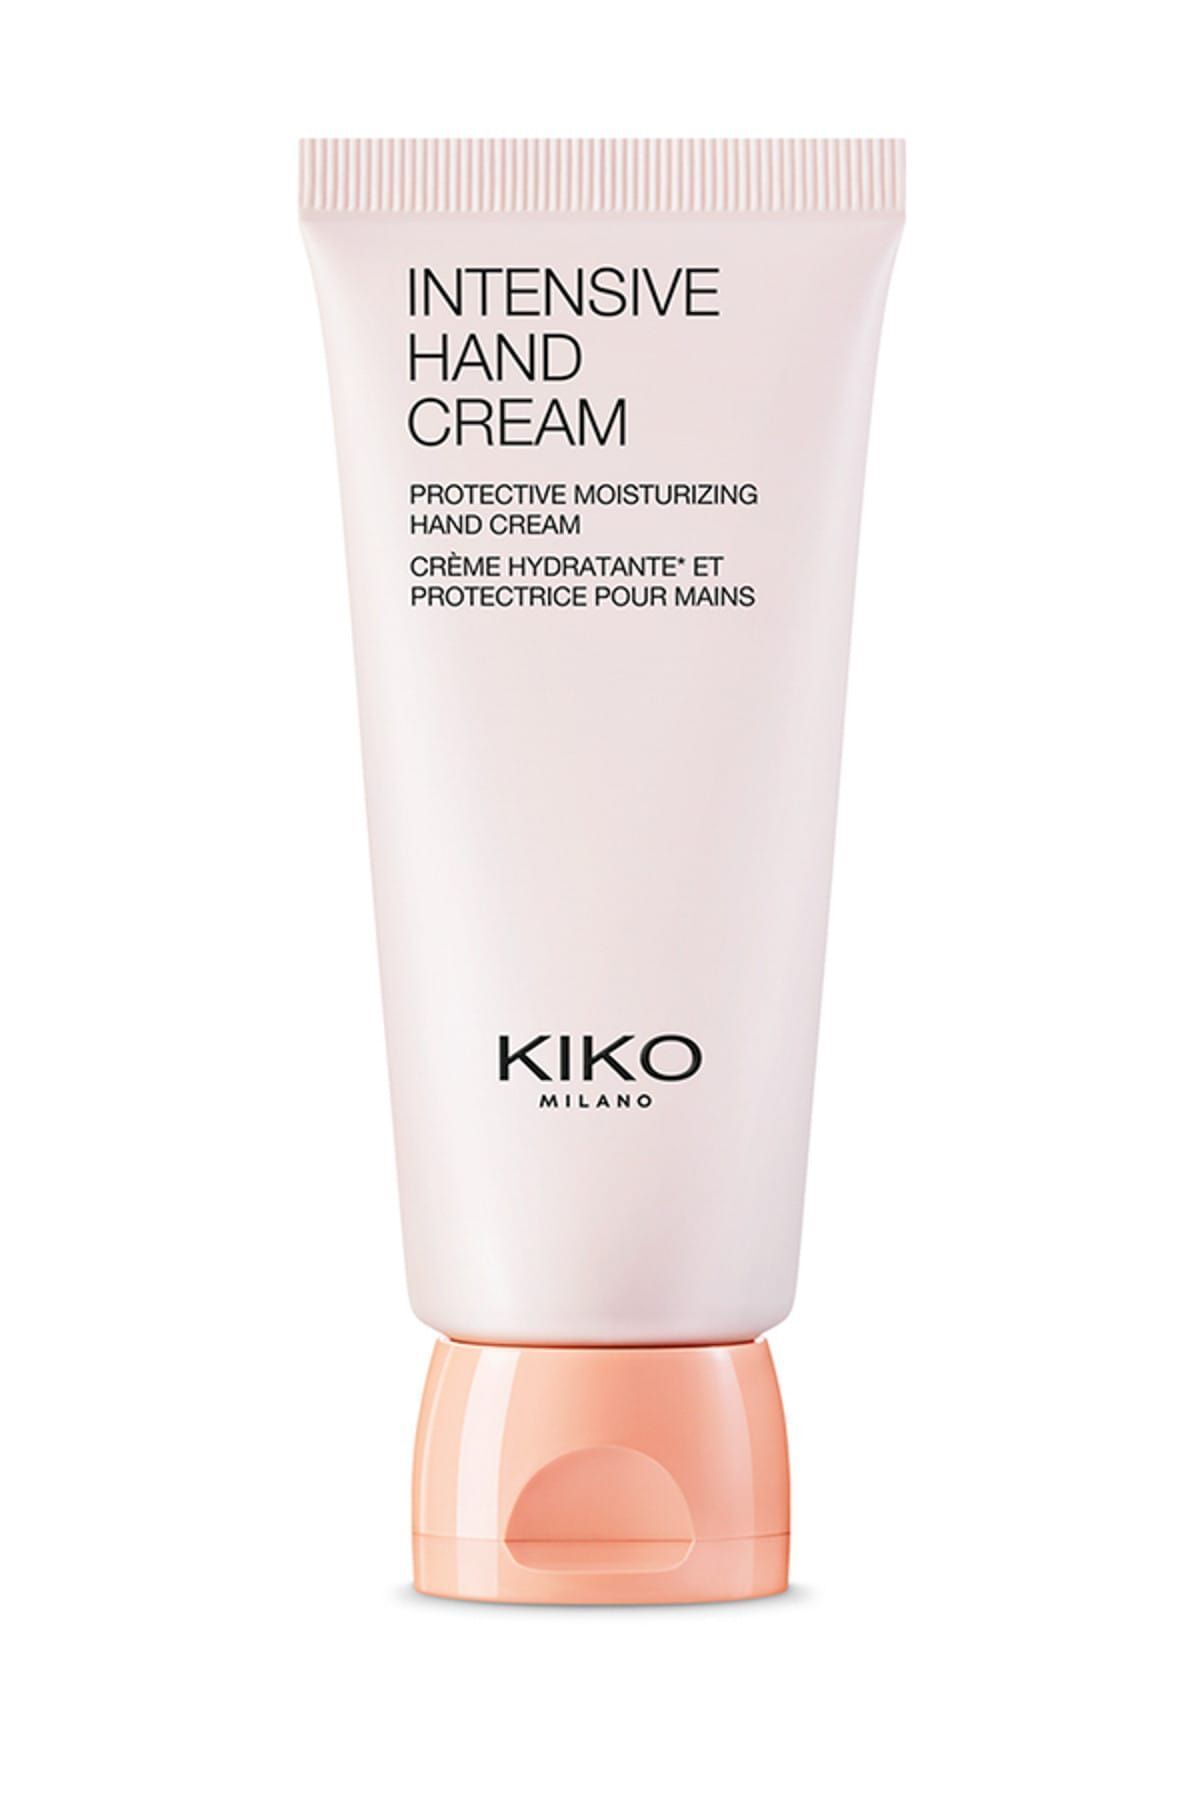 KIKO El Kremi - Intensive Hand Cream 60 ml 8025272621281 KS02301012